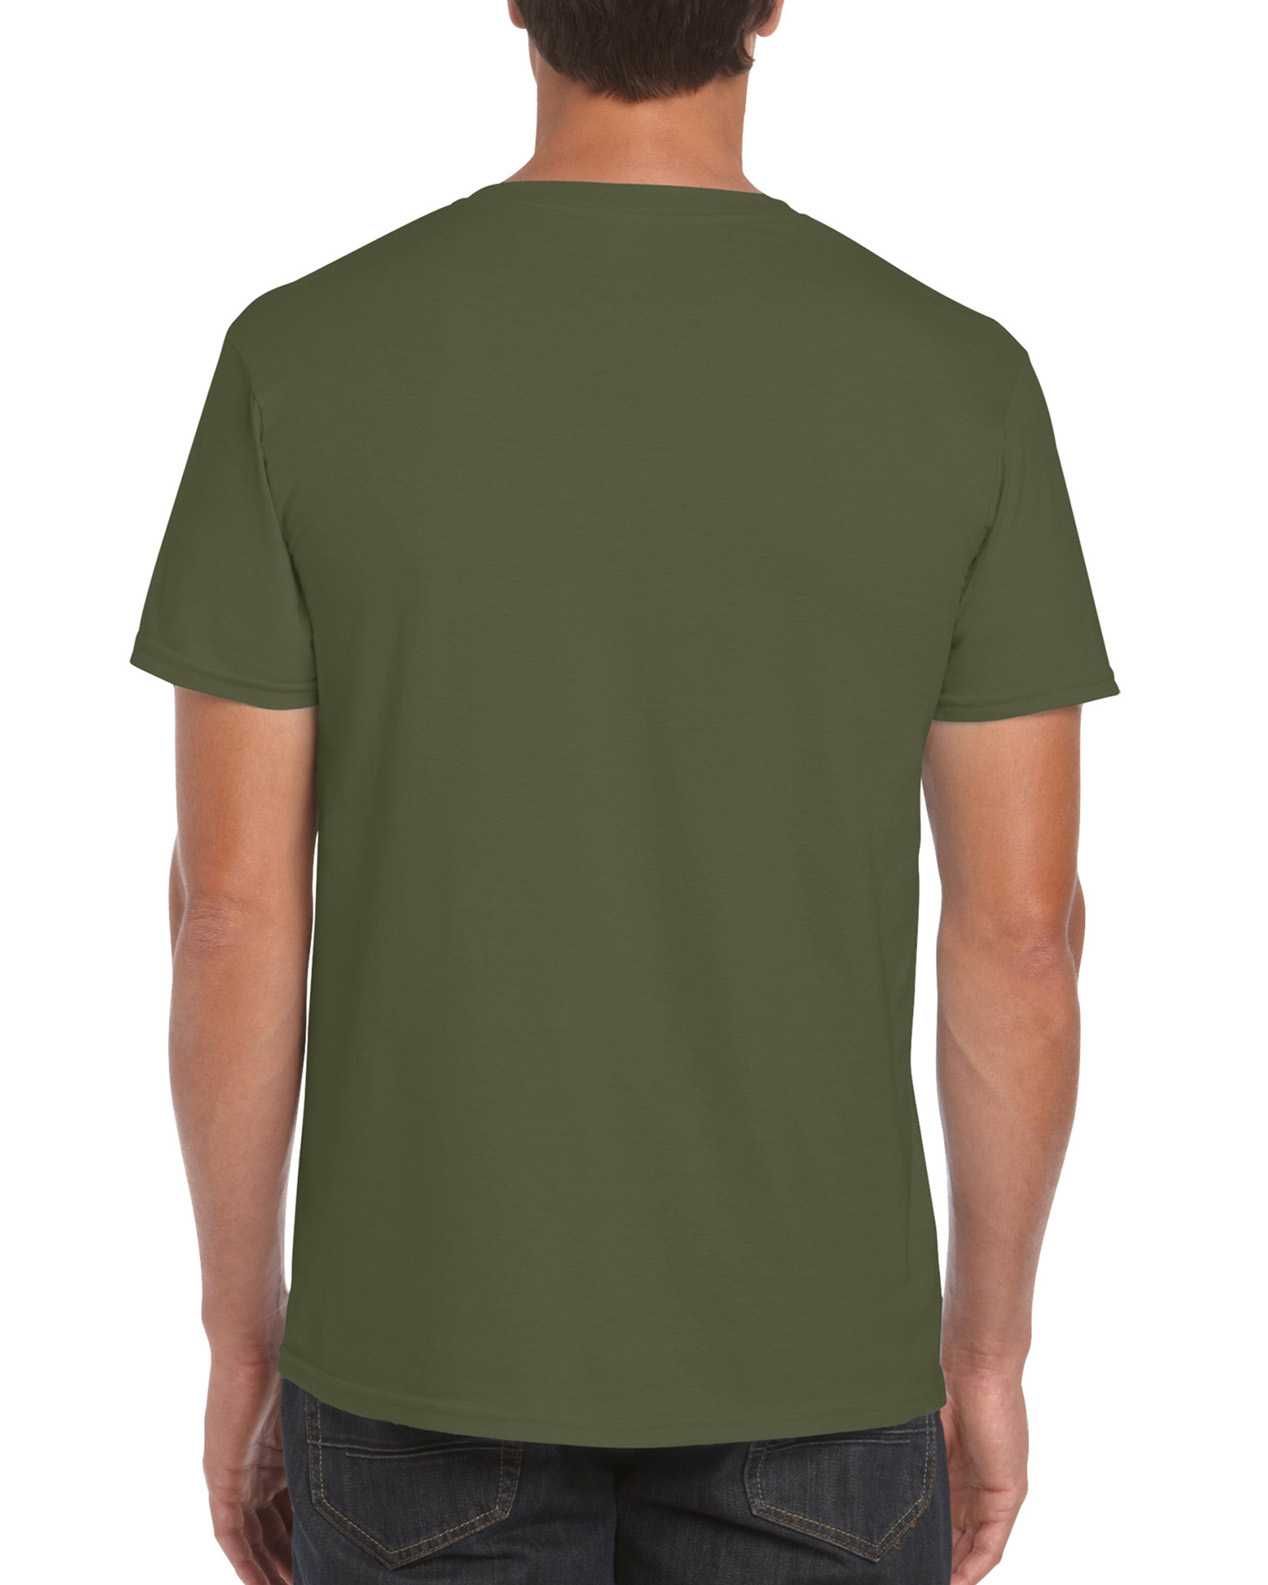 Футболка мужская 100% хлопок Gildan Men’s Softstyle Cotton t-shirt